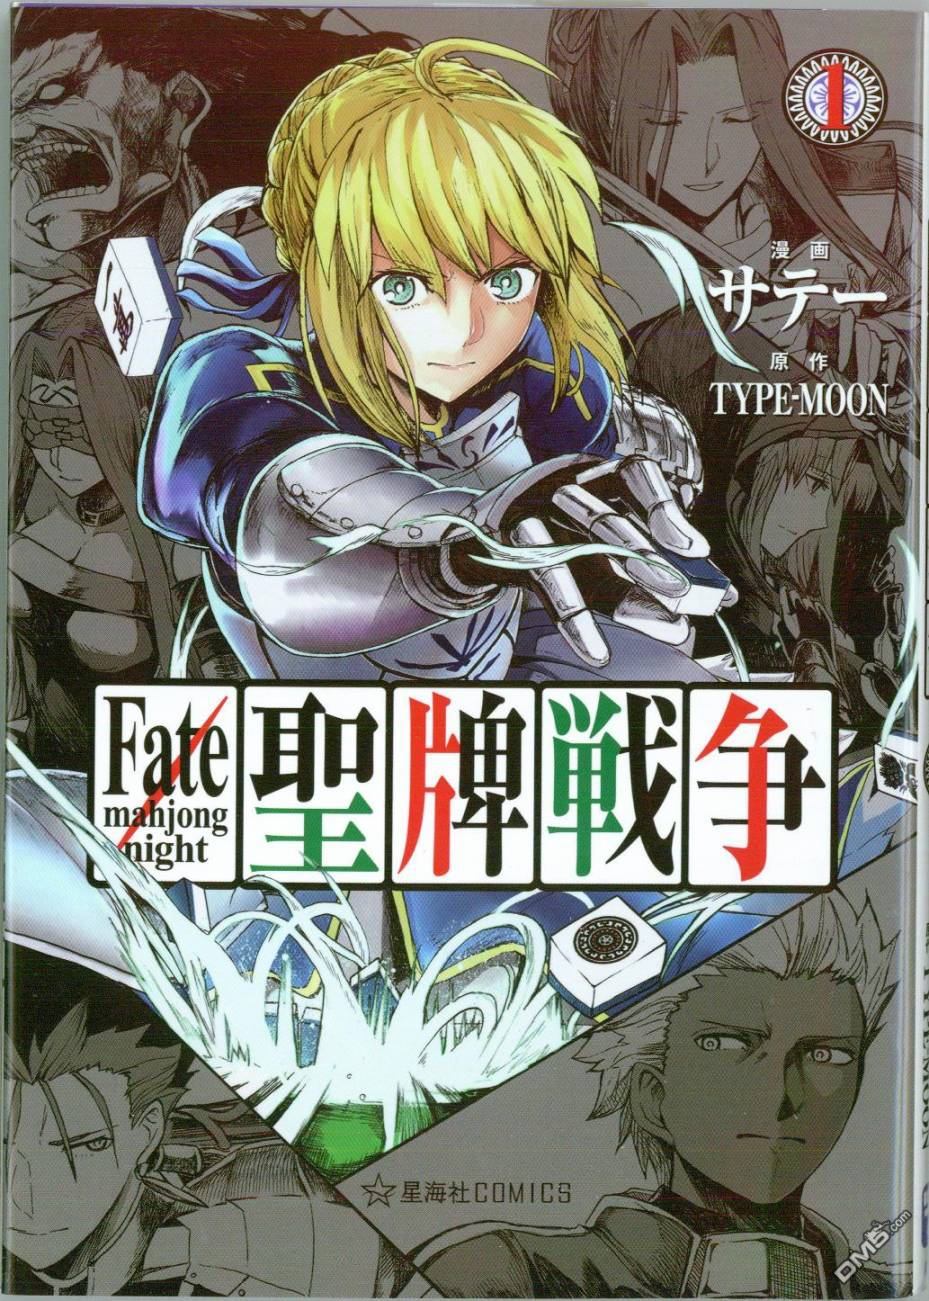 Fateシリーズの麻雀パロディ漫画「聖牌戦争」が面白い！【TYPE-MOON】